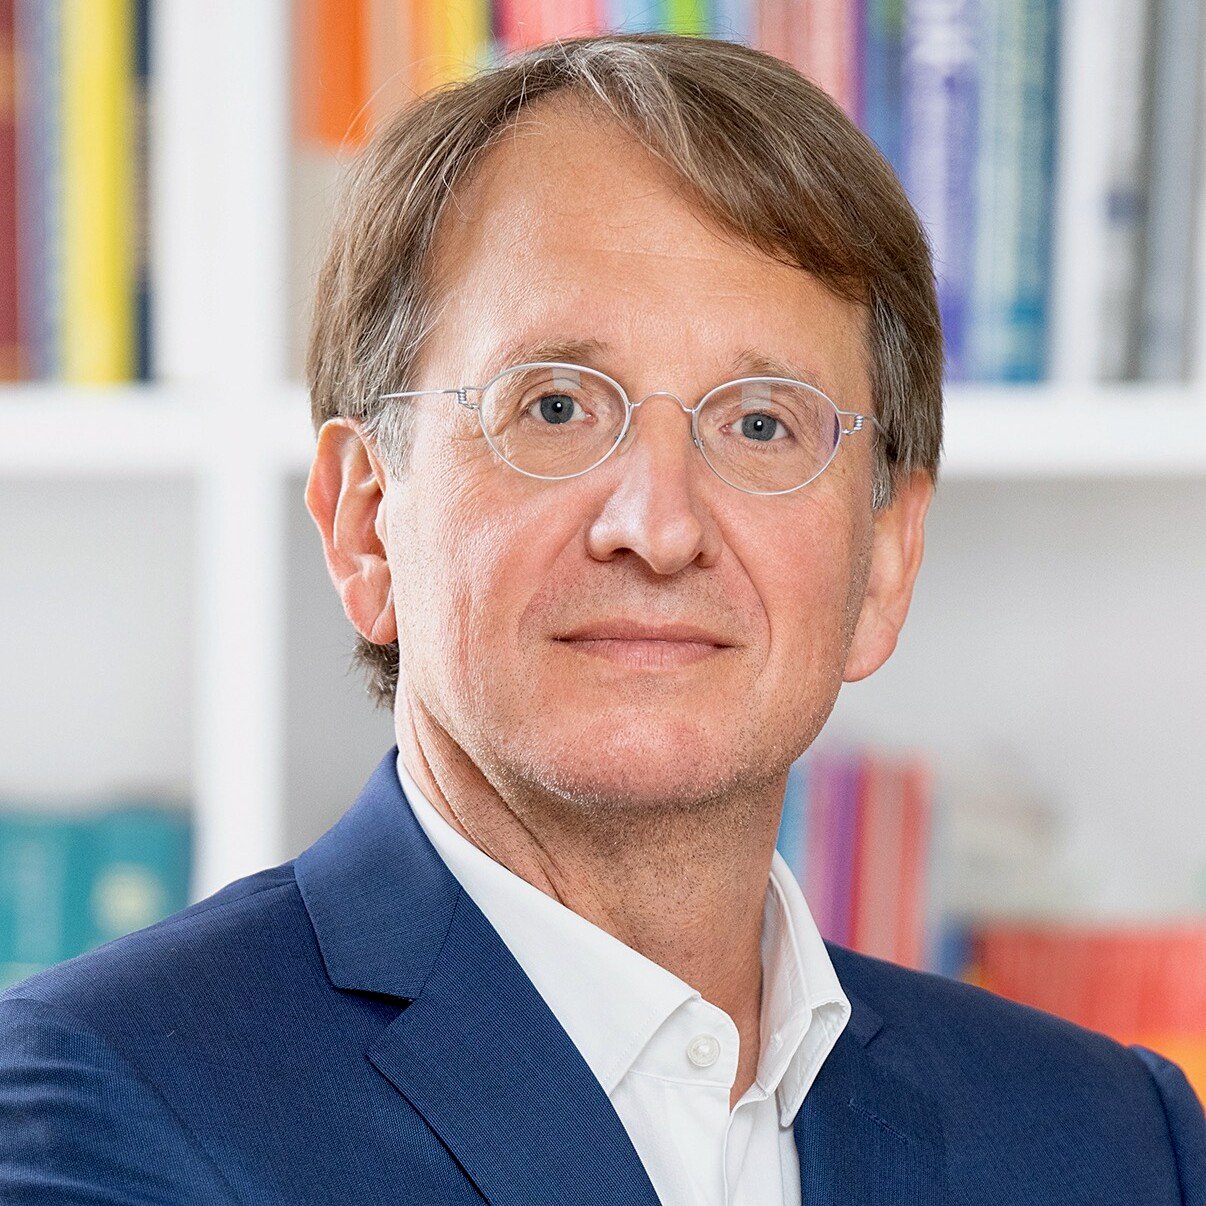 Univ. Prof. Dr. Andreas Kruger - Augenarzt 1090 Wien